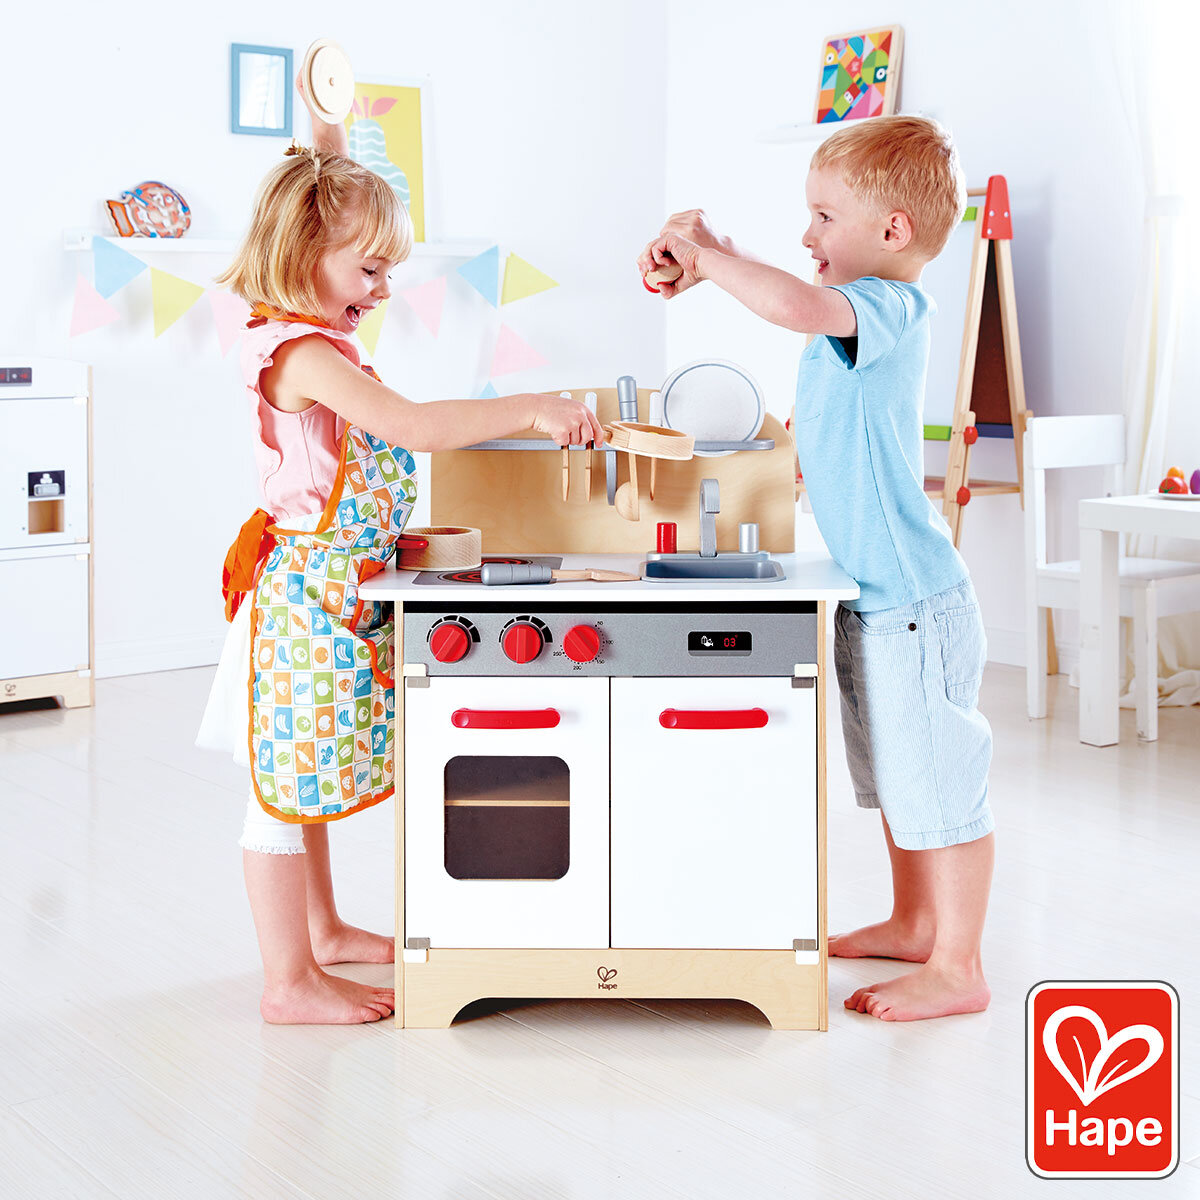 Buy Hape Deluxe Mini Kitchen Lifestyle Image at Costco.co.uk